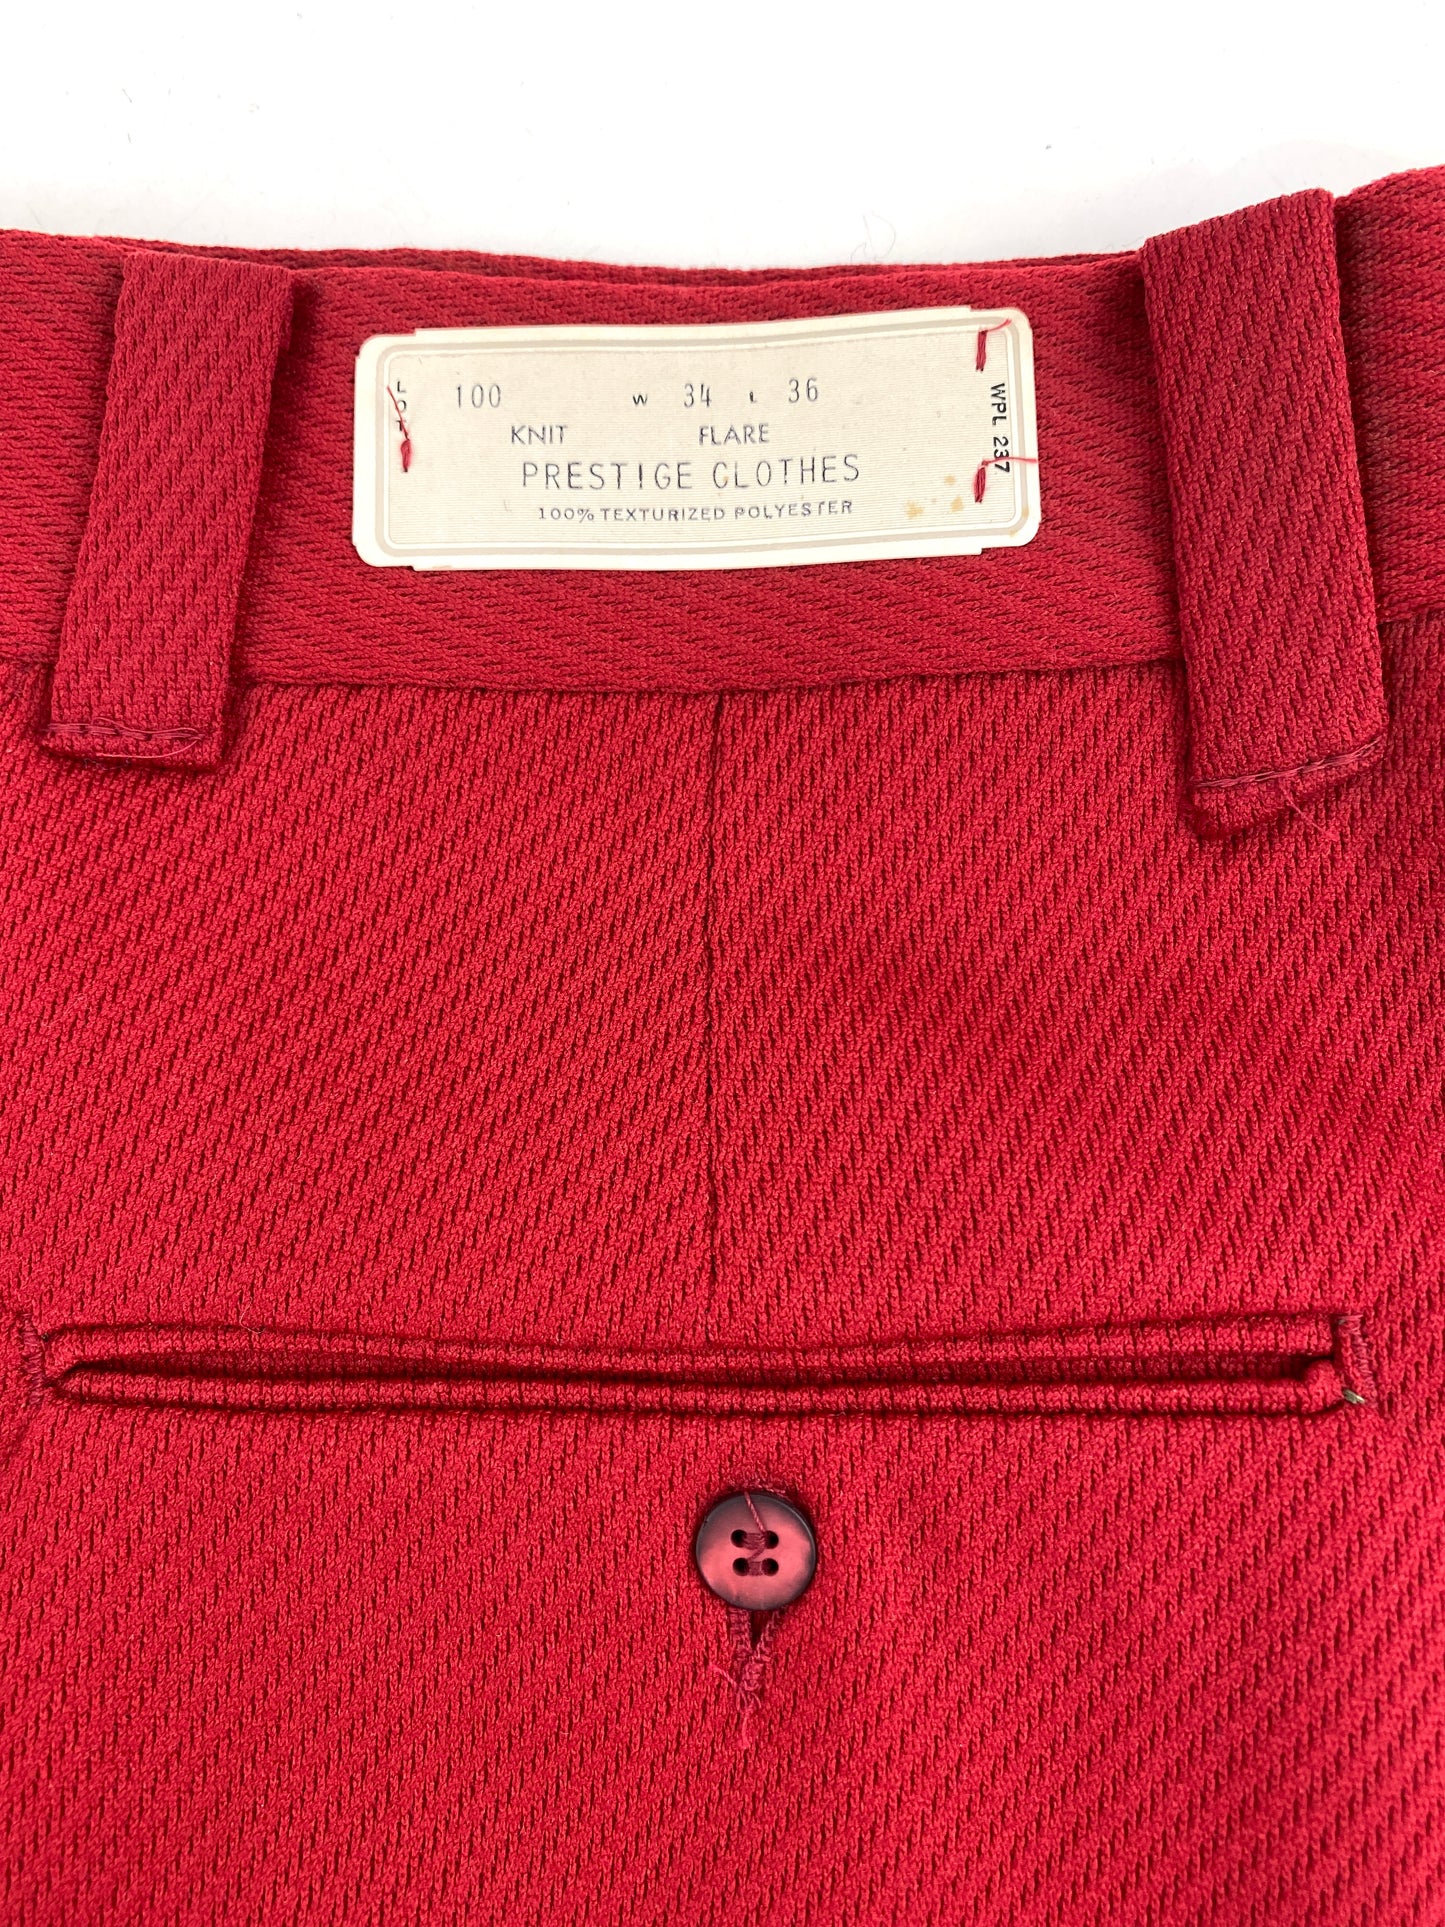 Vintage 1970s Deadstock Polyester Flared Trousers, Men's Red Slacks, NOS